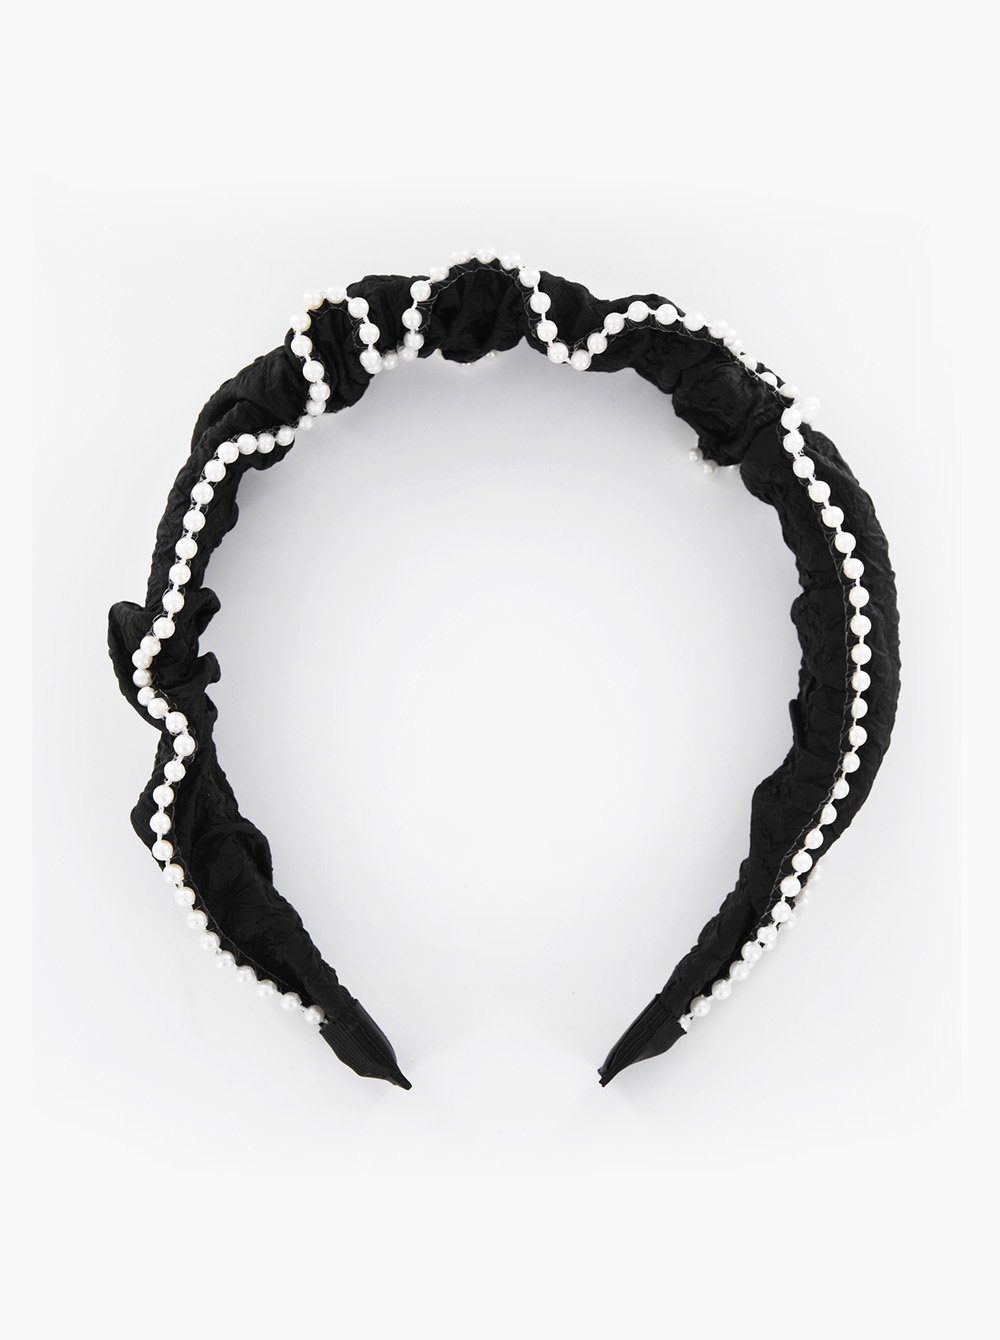 axy Haarreif Schwarz in mit Design, Haareifen Damen modischem Haarband Vintage Perlen Haarreif